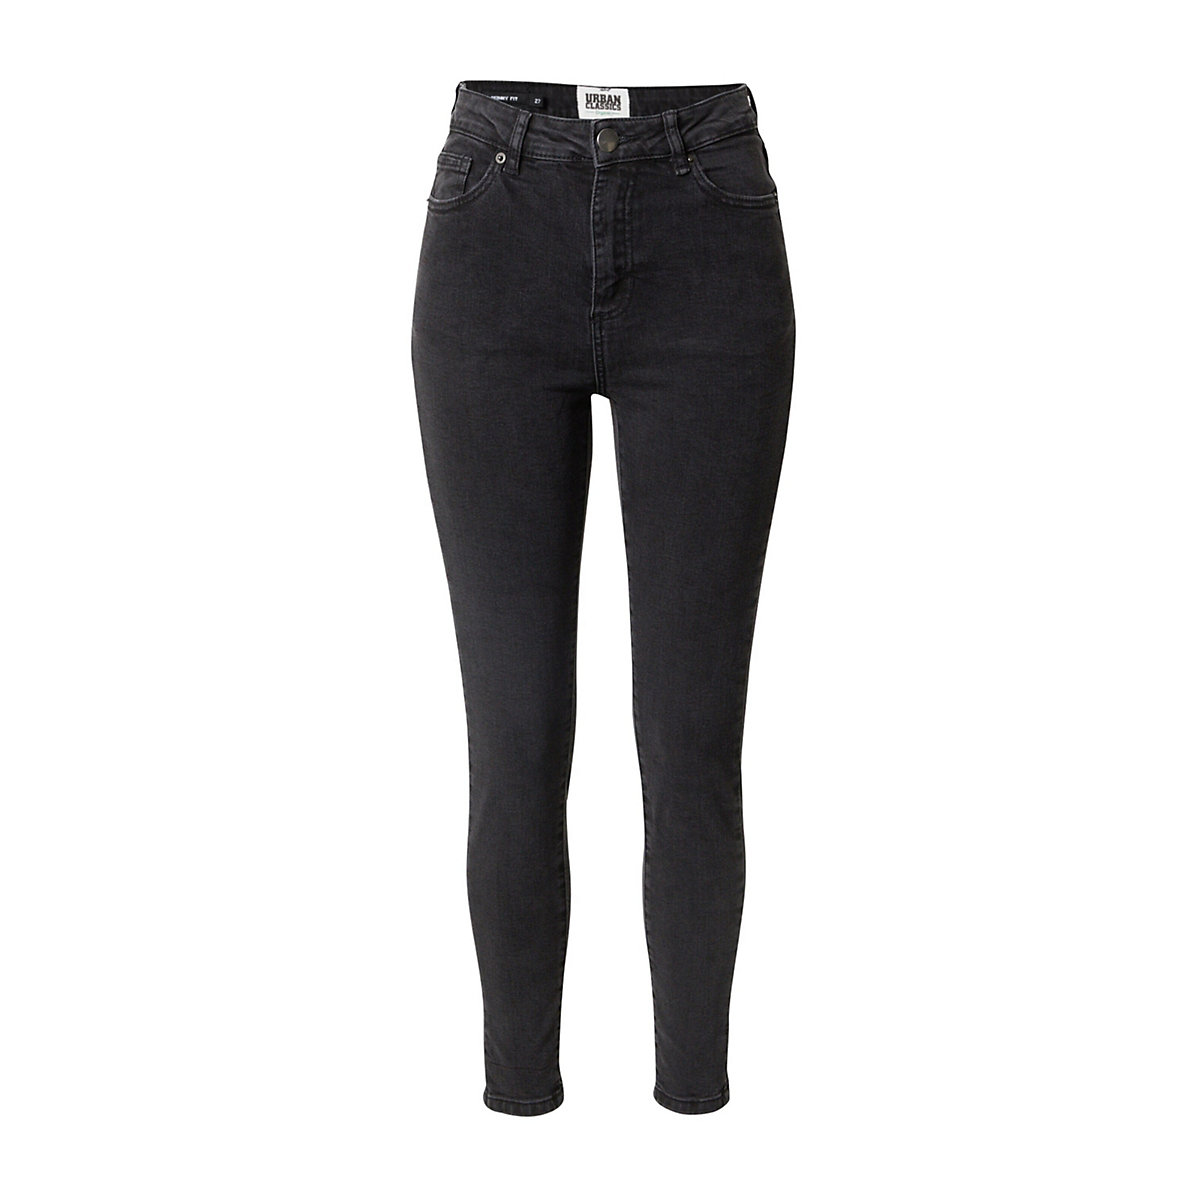 Urban Classics Jeans black denim